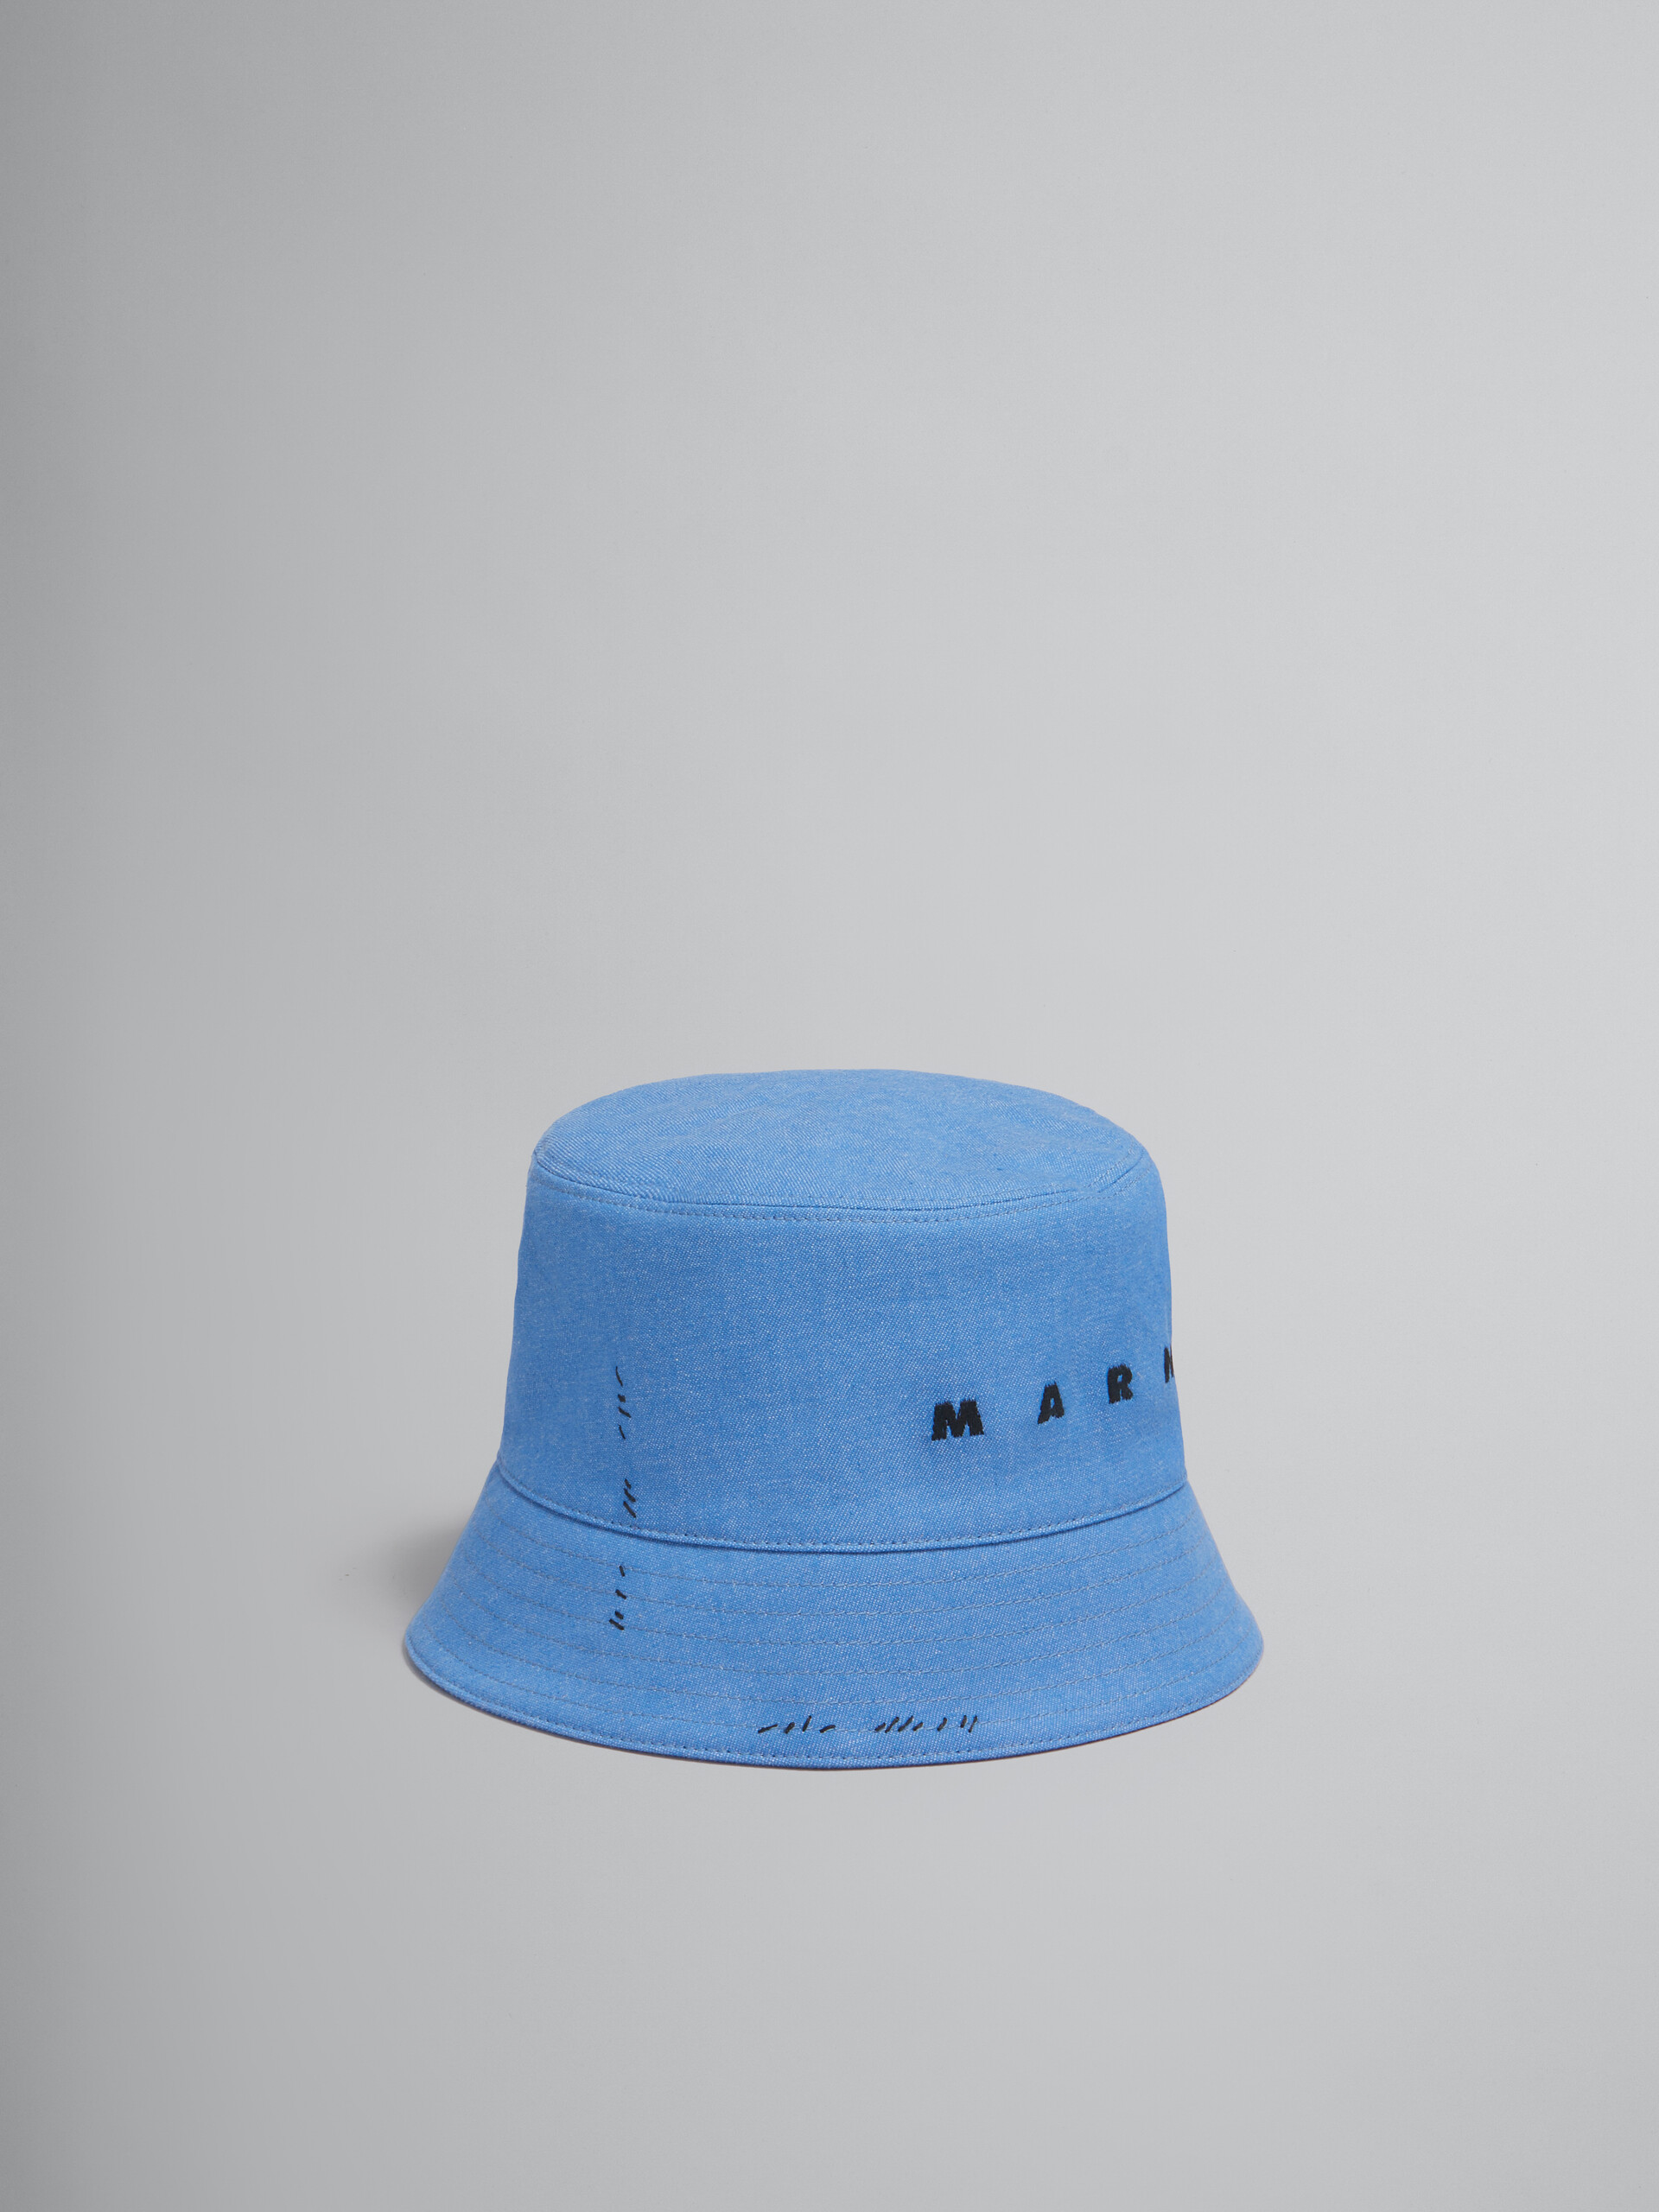 Bob en denim bleu avec effet raccommodé Marni - Chapeau - Image 1